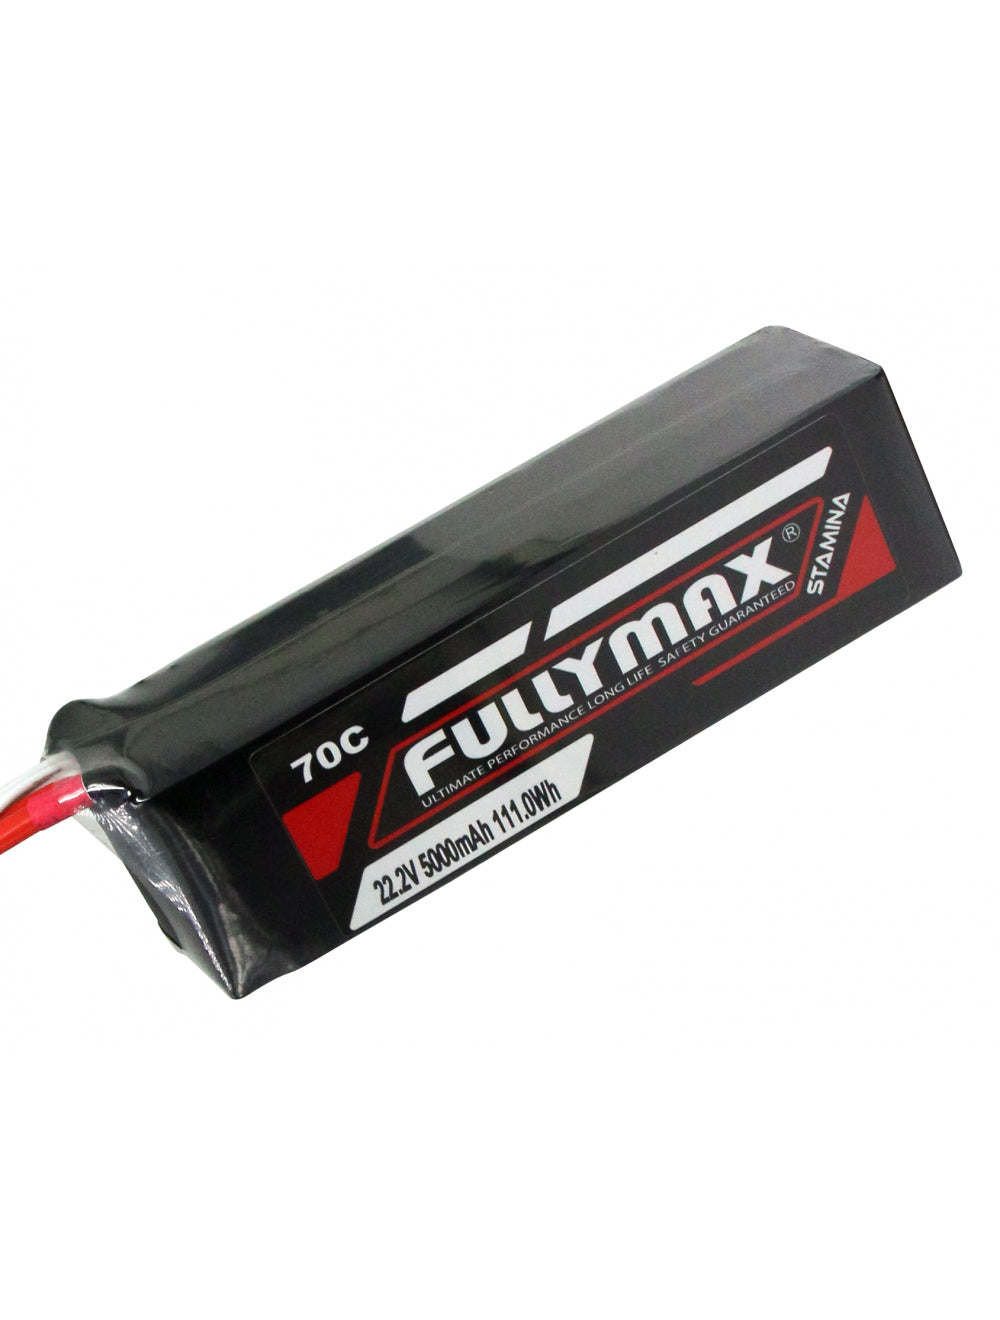 Overlander Fullymax 5000mAh 22.2V 6S 70C LiPo Battery - XT90 Connector 3442